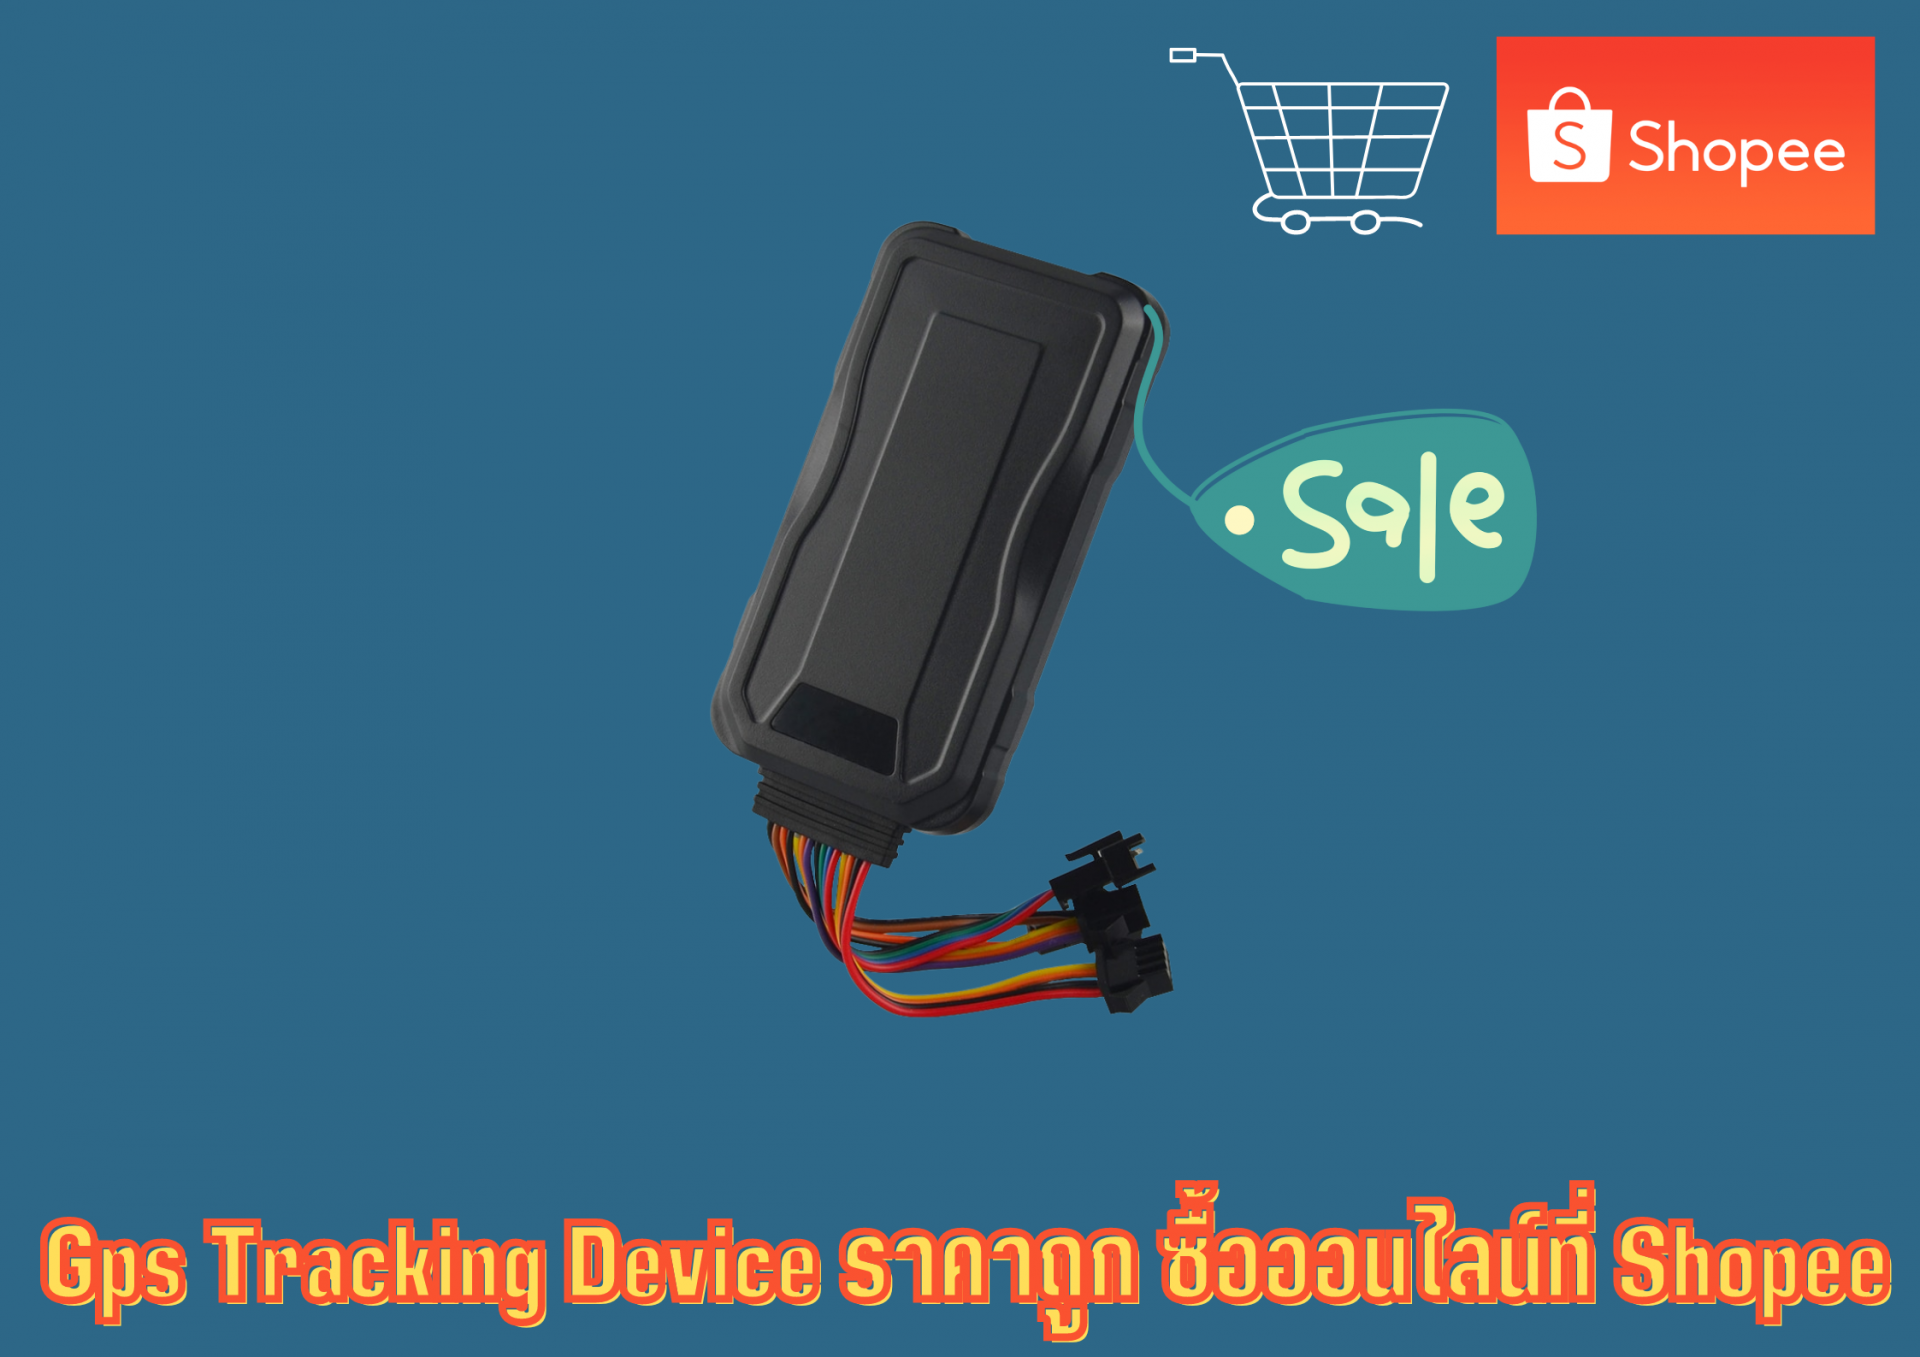 Gps Tracking Device ราคาถูก ซื้อออนไลน์ที่